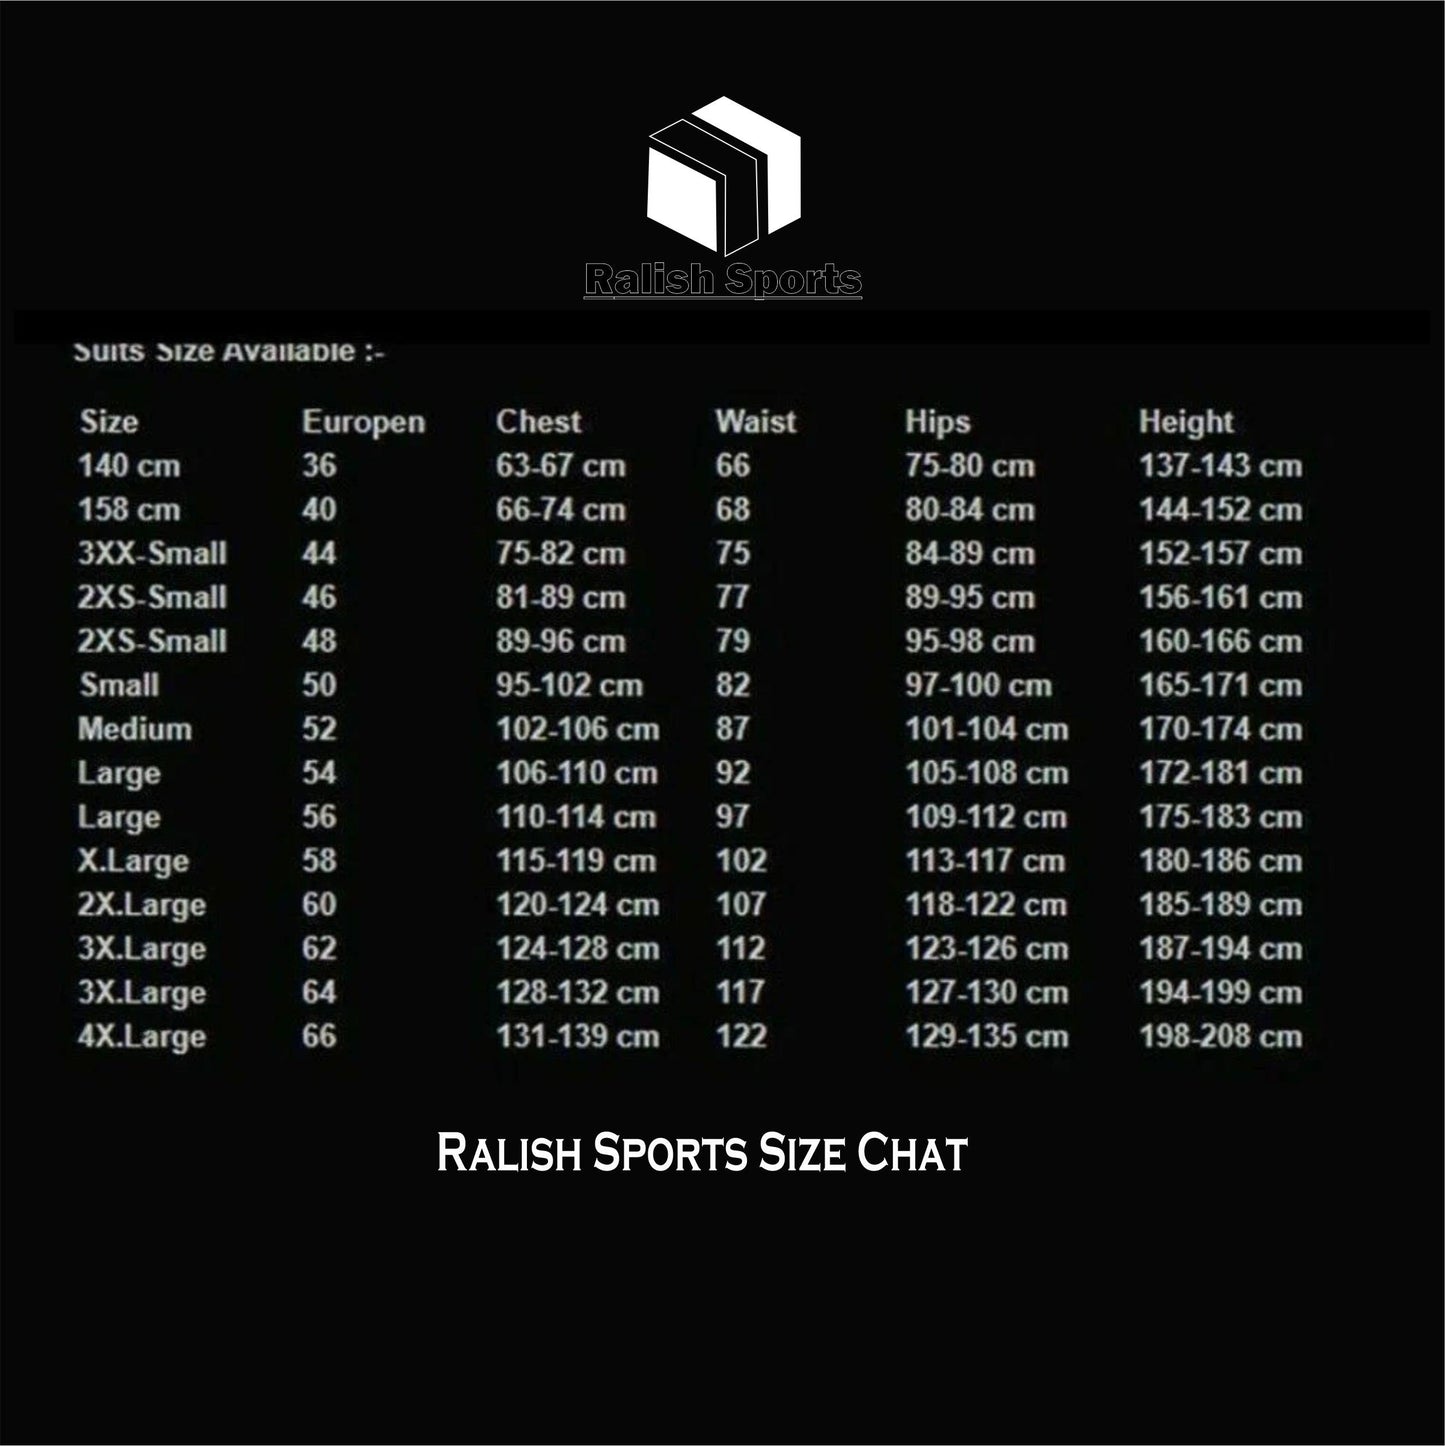 Fernando Alonso Race Suit 2019 - Ralish Sports